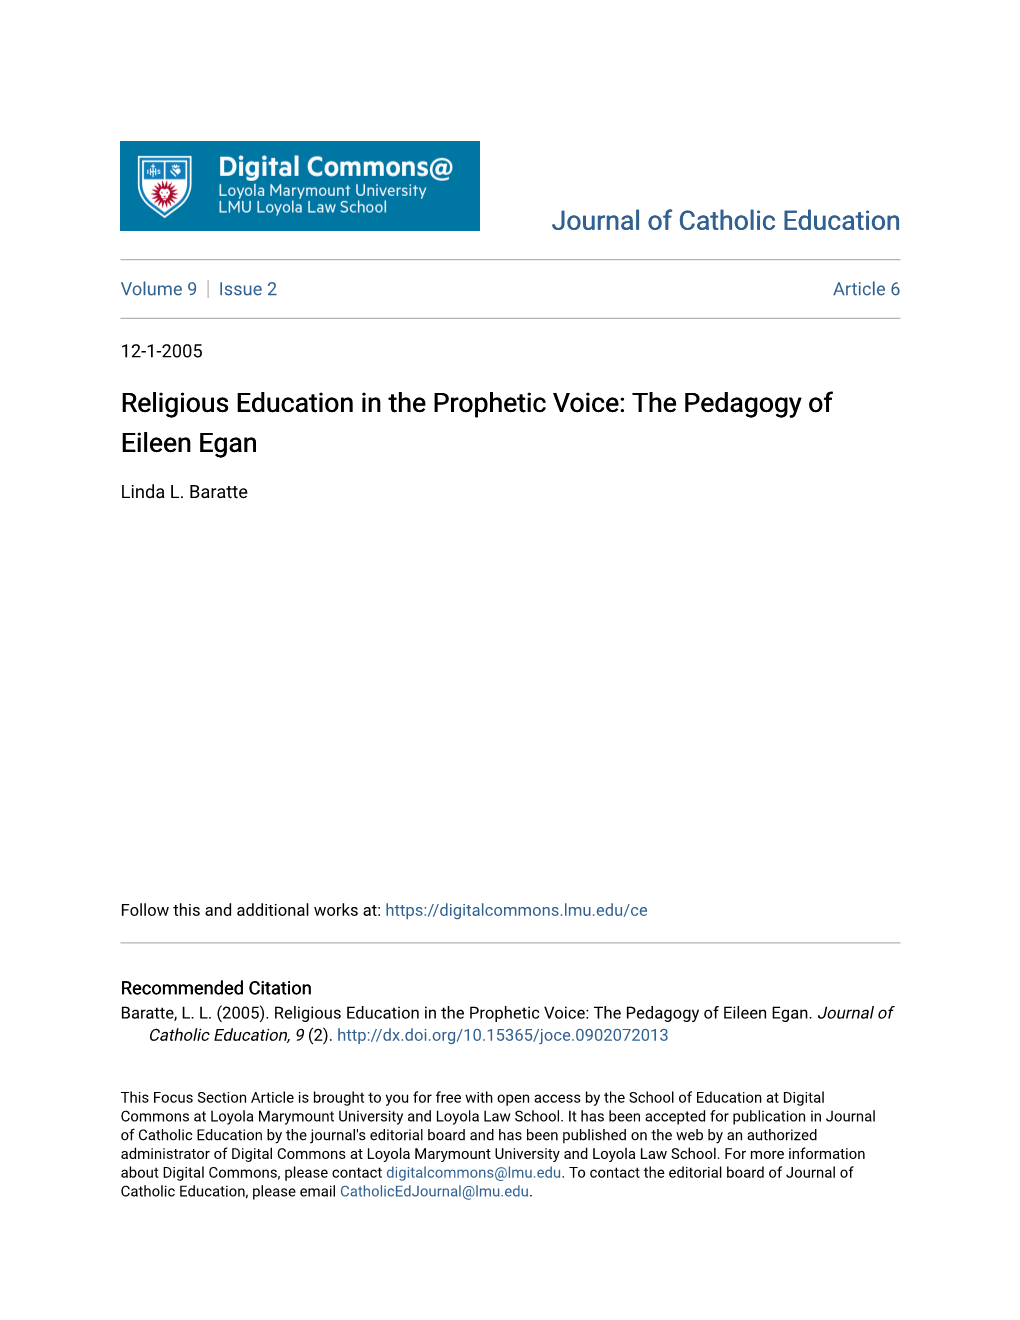 Religious Education in the Prophetic Voice: the Pedagogy of Eileen Egan